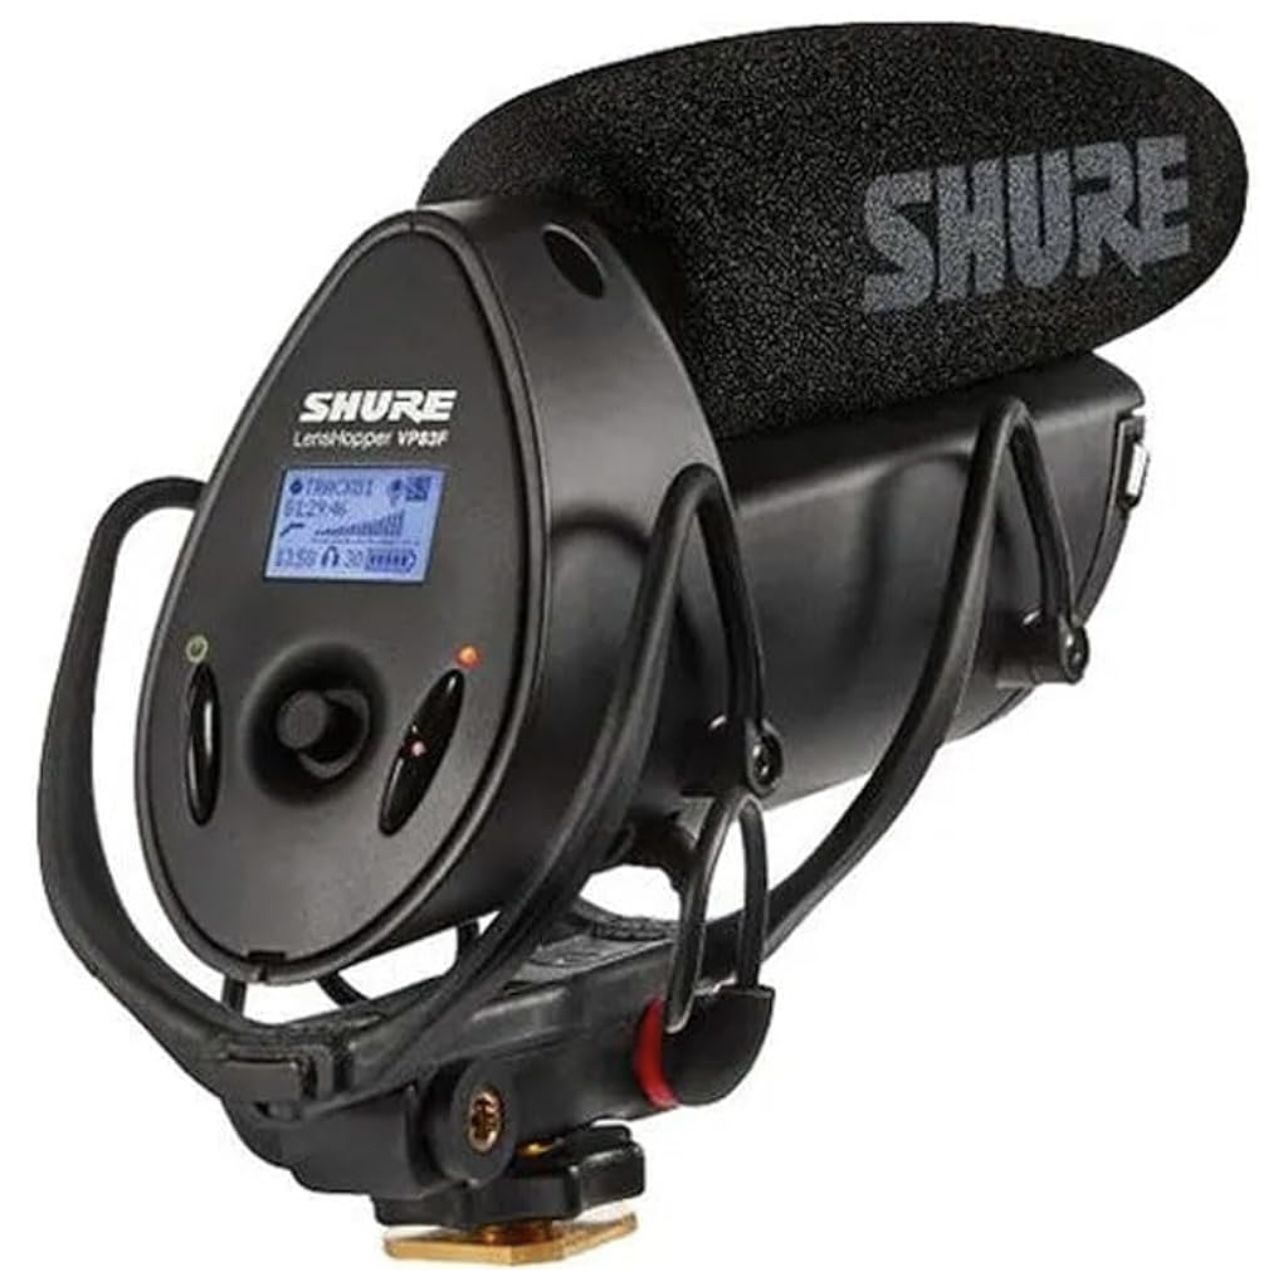 Shure VP83F LensHopper Camera-Mount Shotgun Microphone.